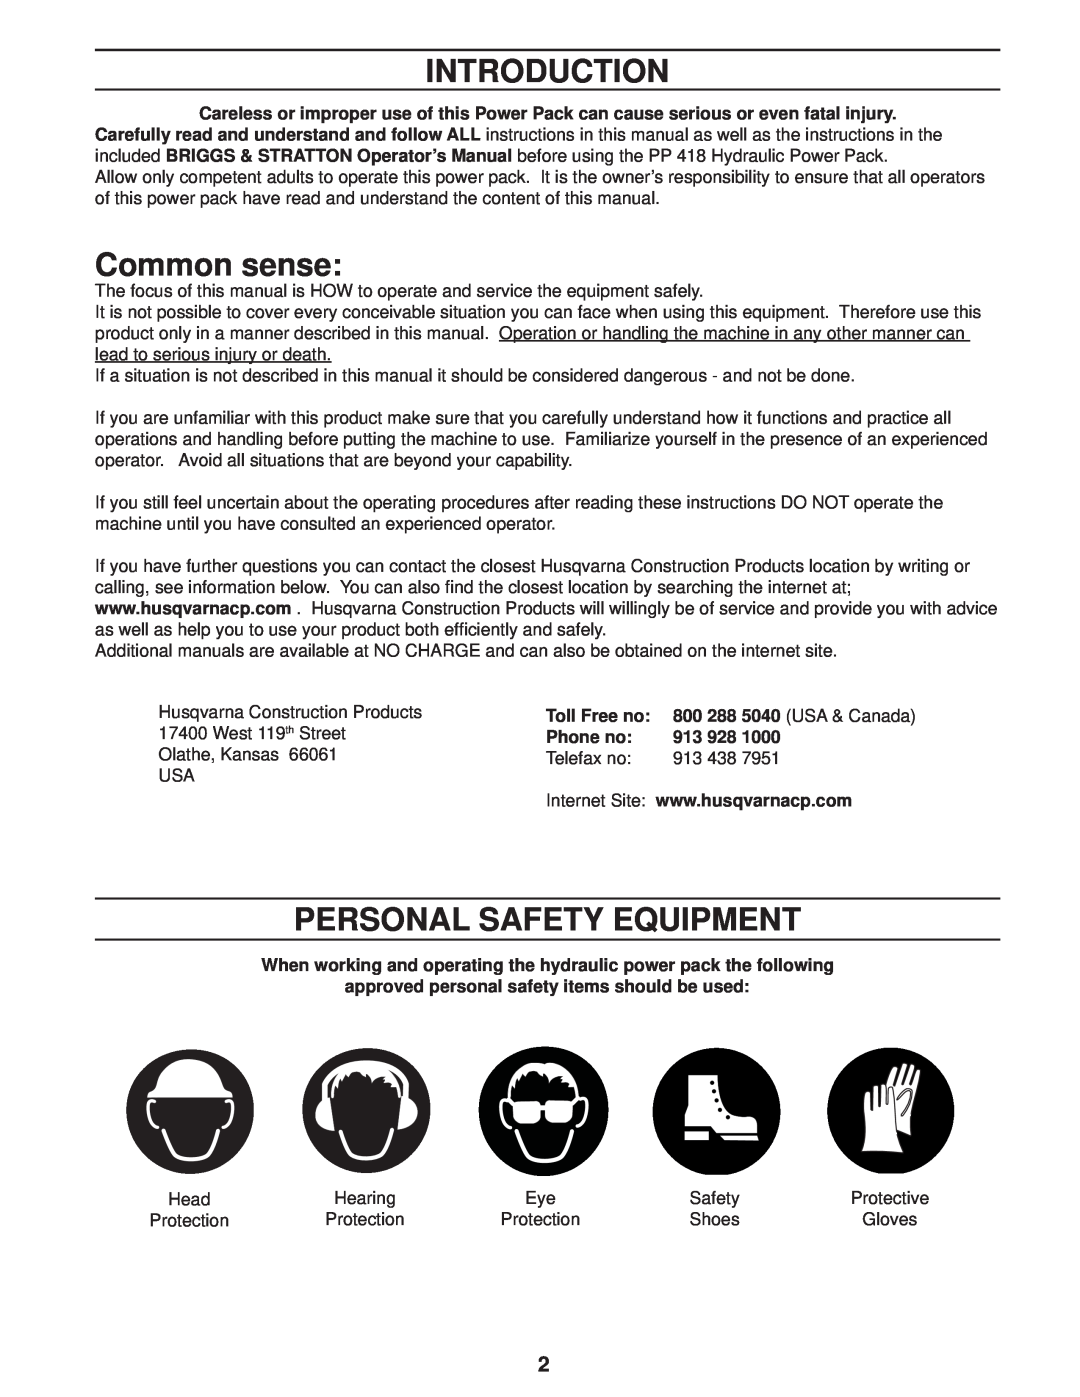 Husqvarna PP 418 manuel dutilisation Introduction, Common sense, Personal Safety Equipment, Toll Free no, Phone no, 913 928 